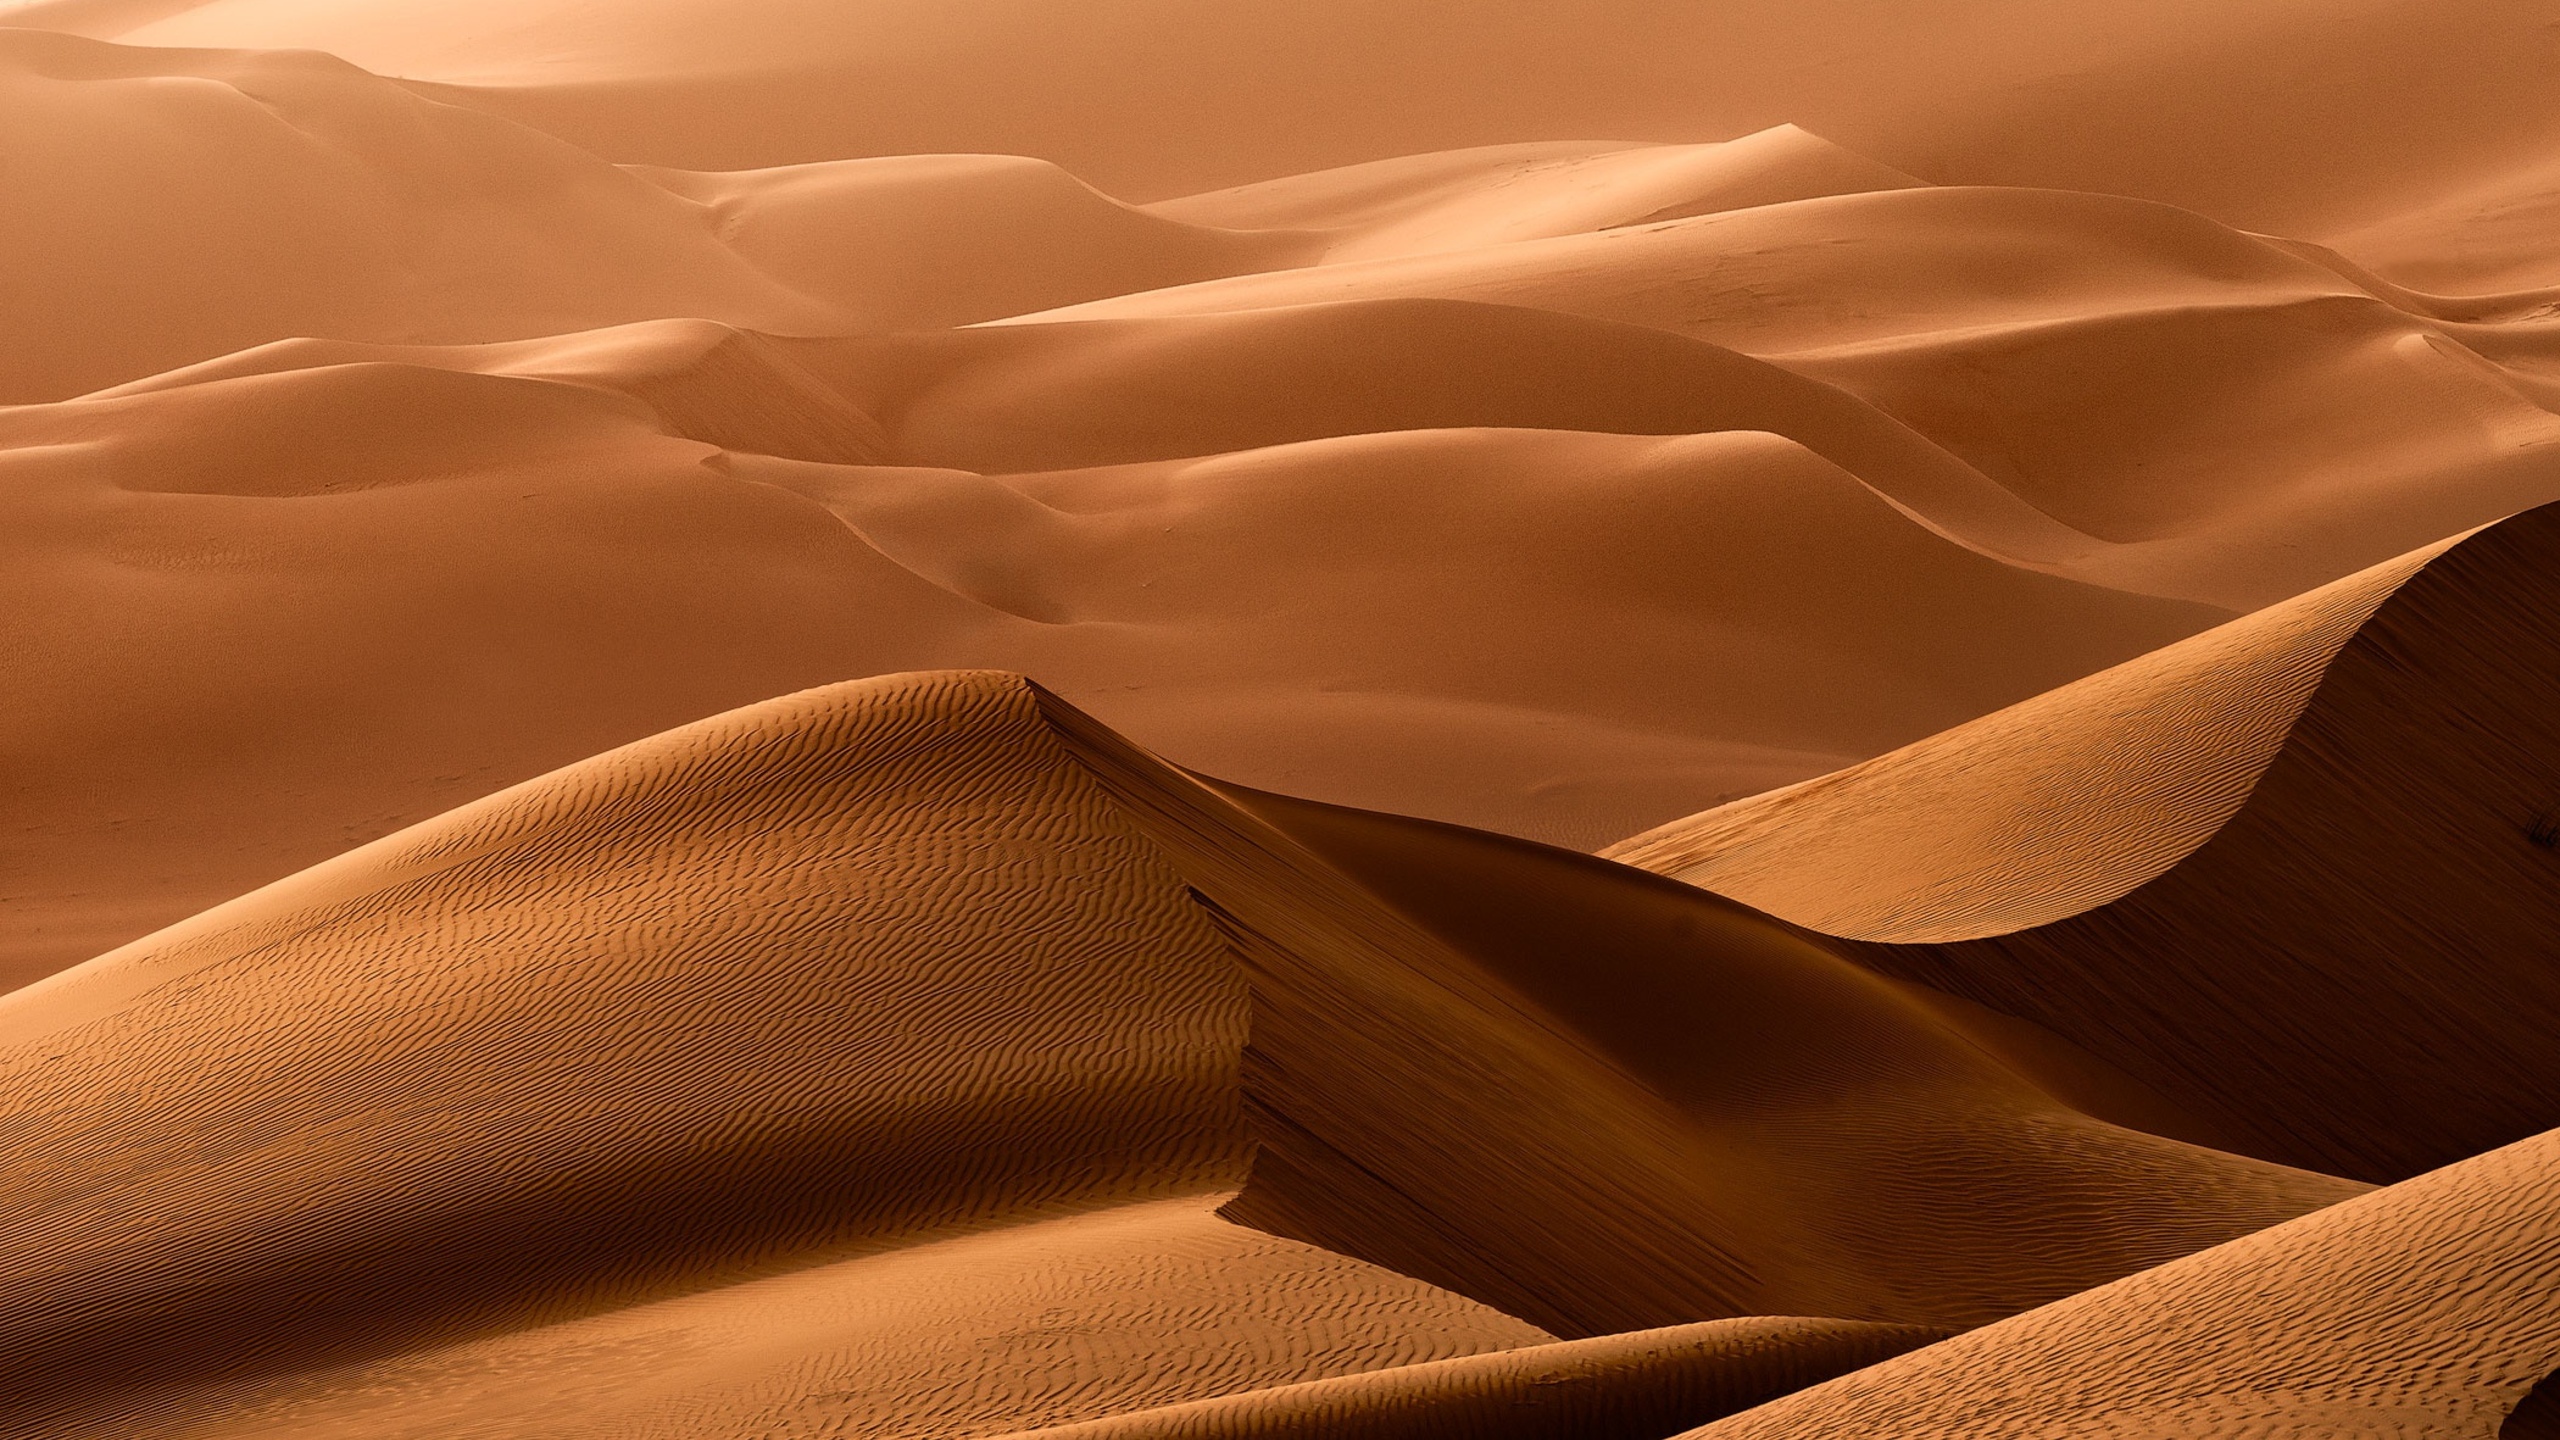 барханы пустыня дюны бесплатно